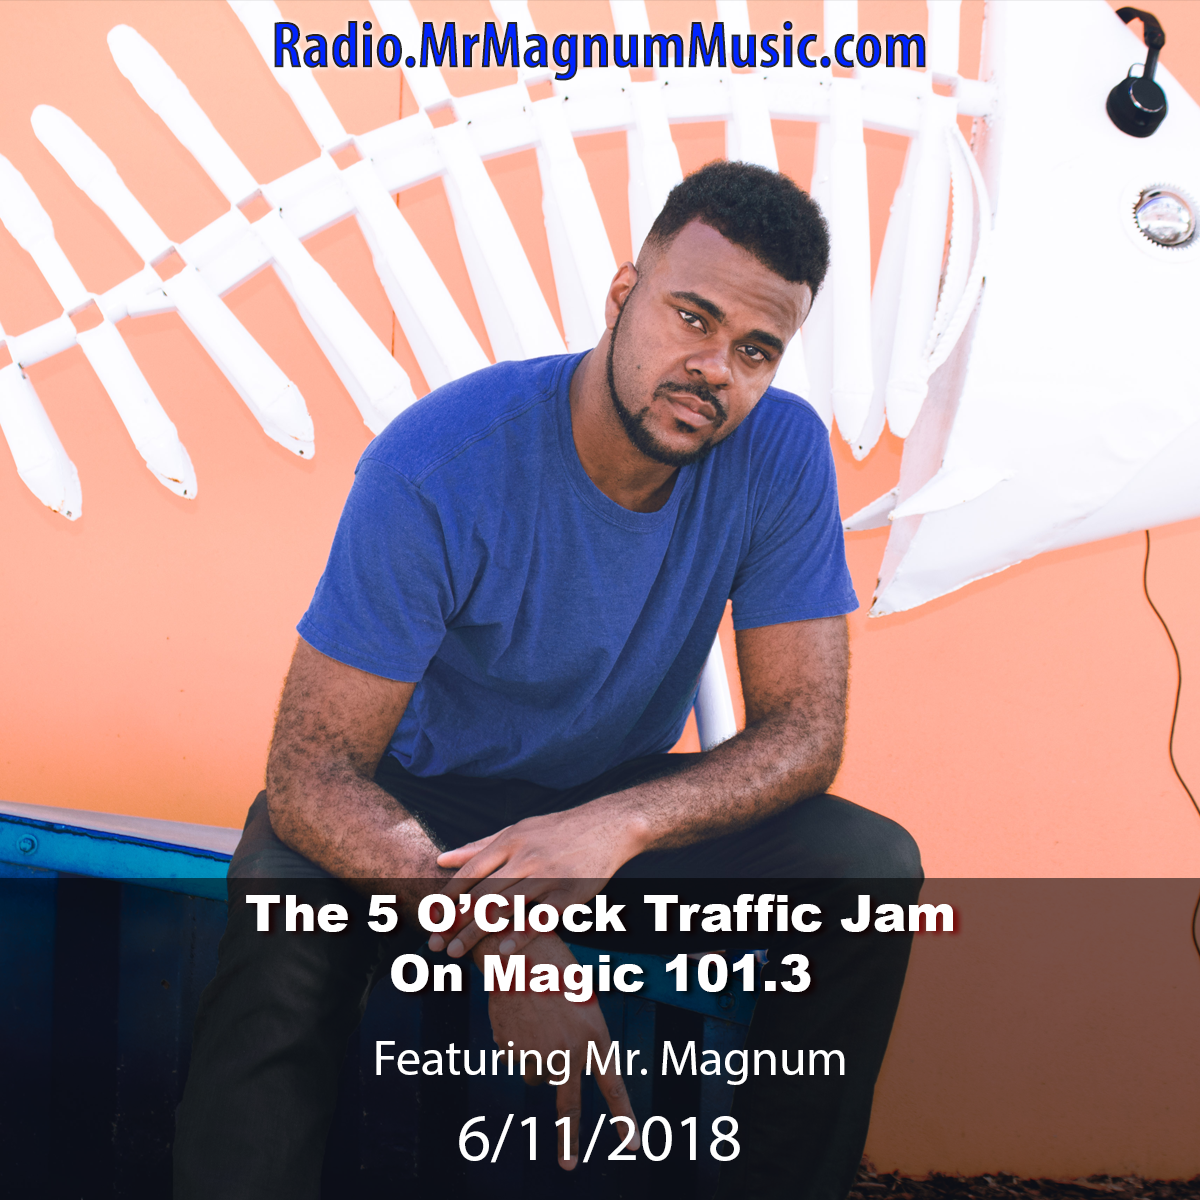 The 5 O'Clock Traffic Jam 20180611 featuring Gainesville's #1 DJ, Mr. Magnum on Magic 101.3